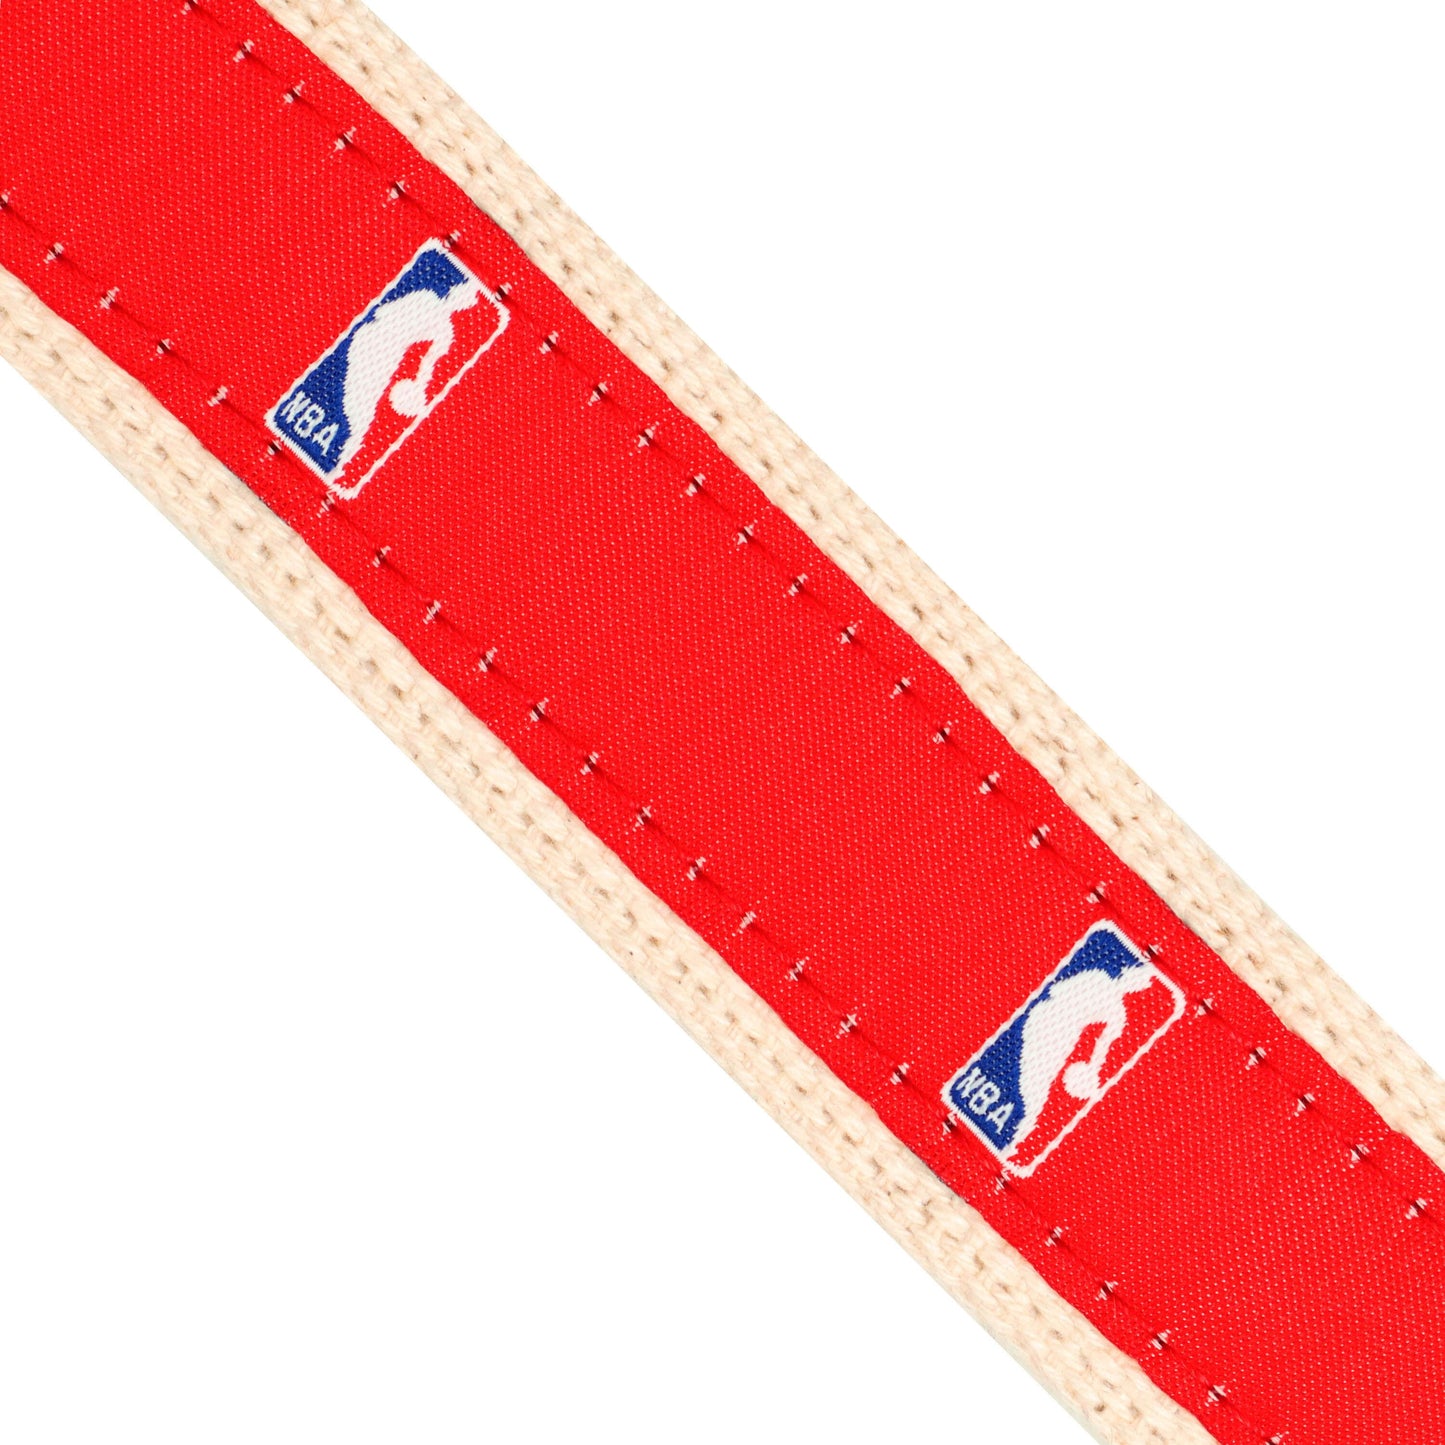 Rowing Blazers x NBA Logo Belt